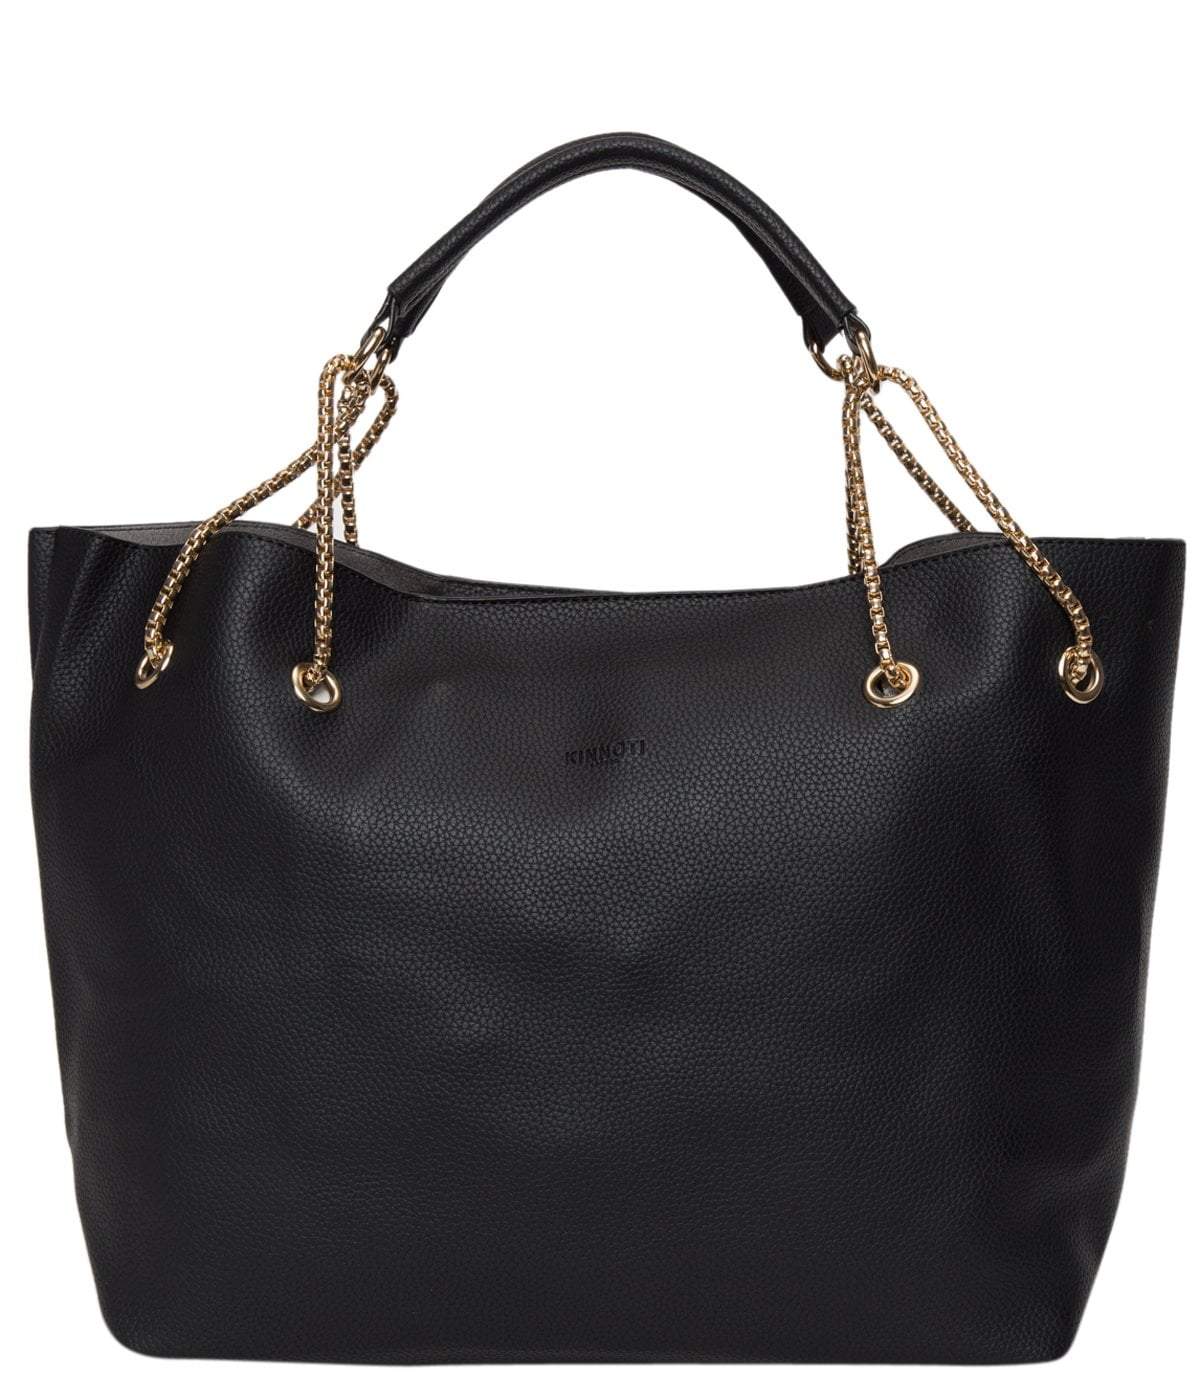 kinnoti Handbags Black Black color Chain Tote Bag